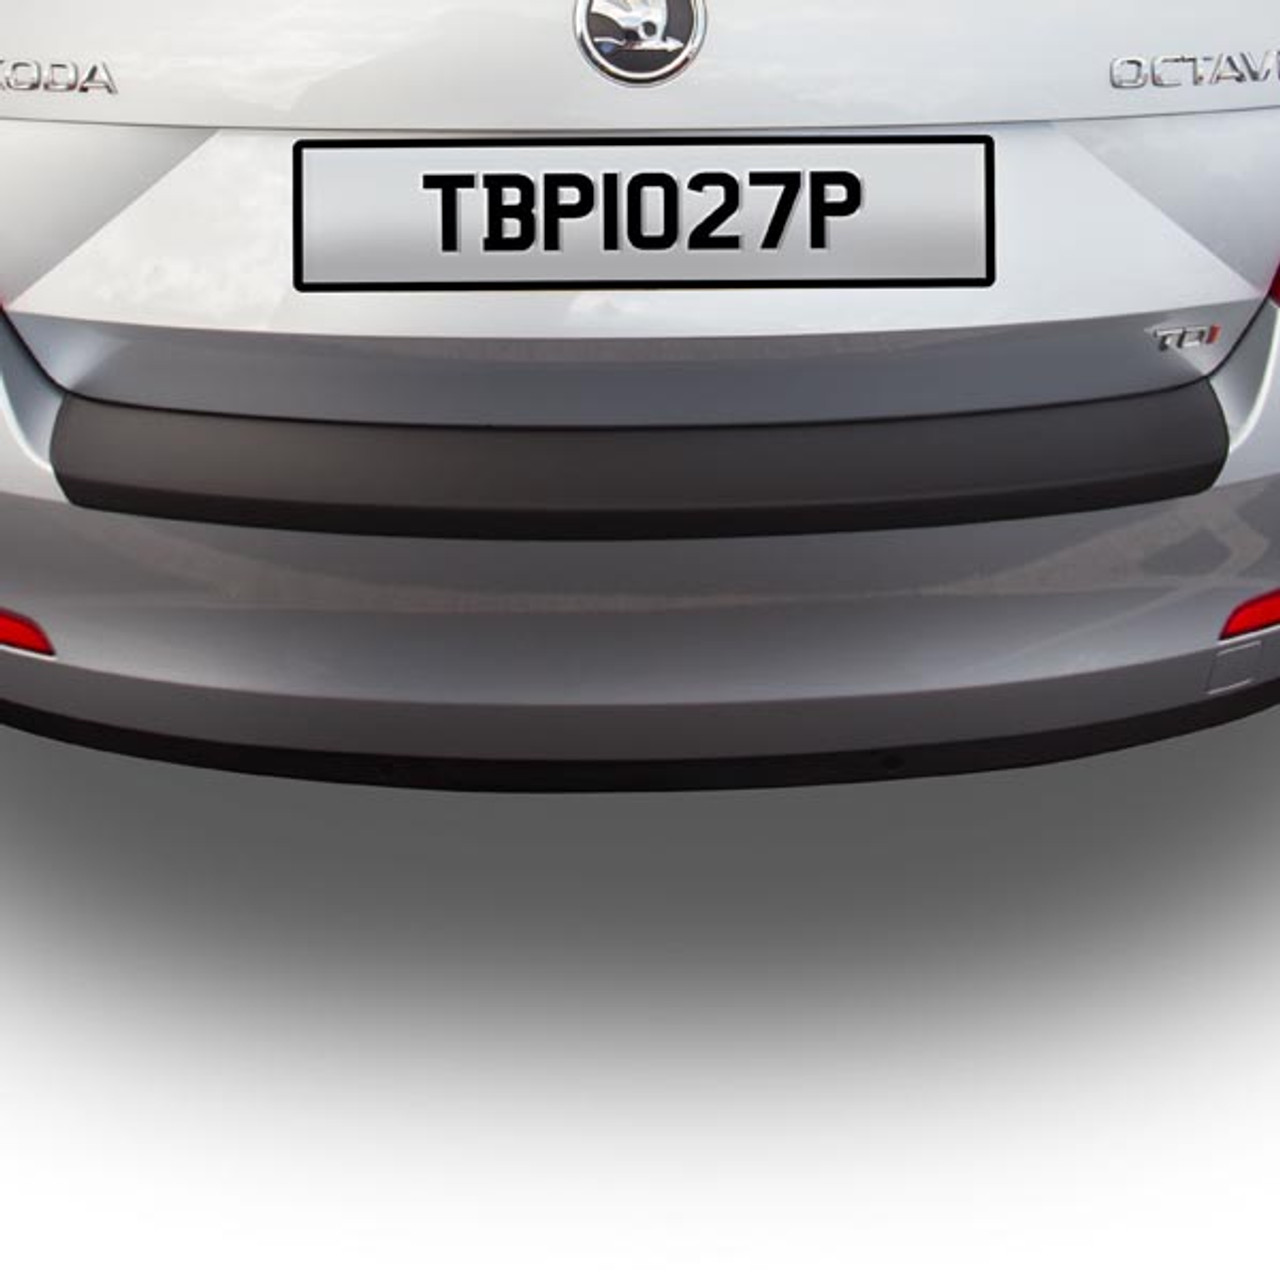 Plastic Bumper Protector for Skoda Octavia Hatchback 2012 to 2017